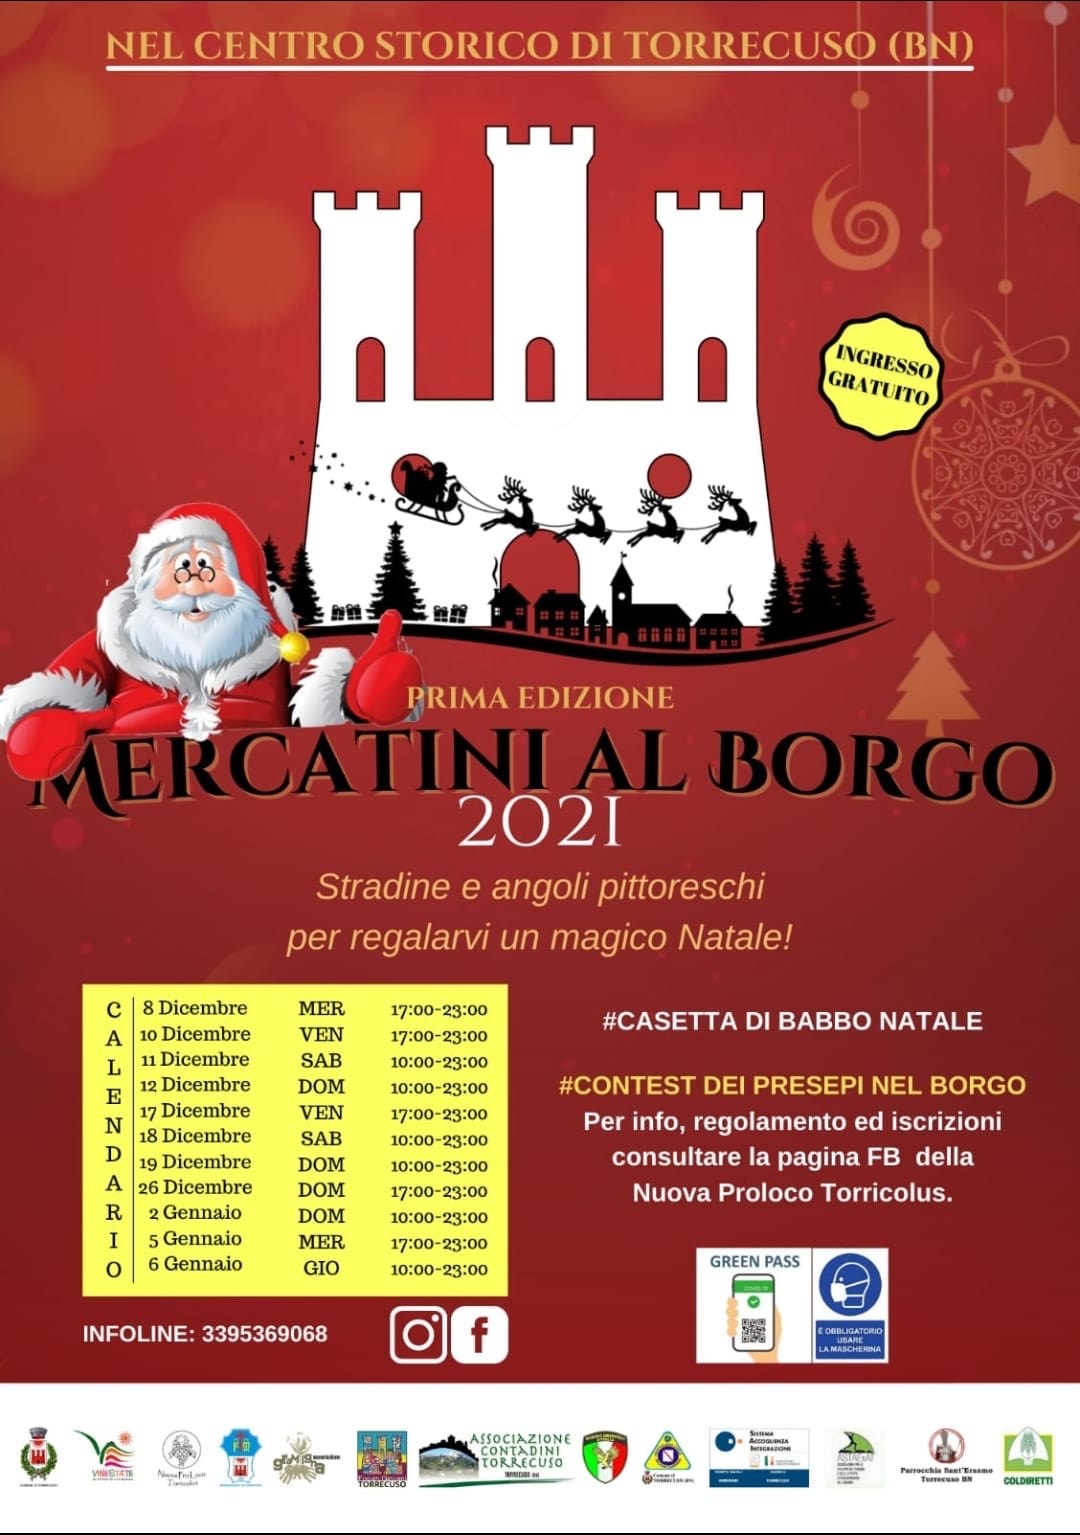 Torrecuso|Al via i Mercatini di Natale al Borgo